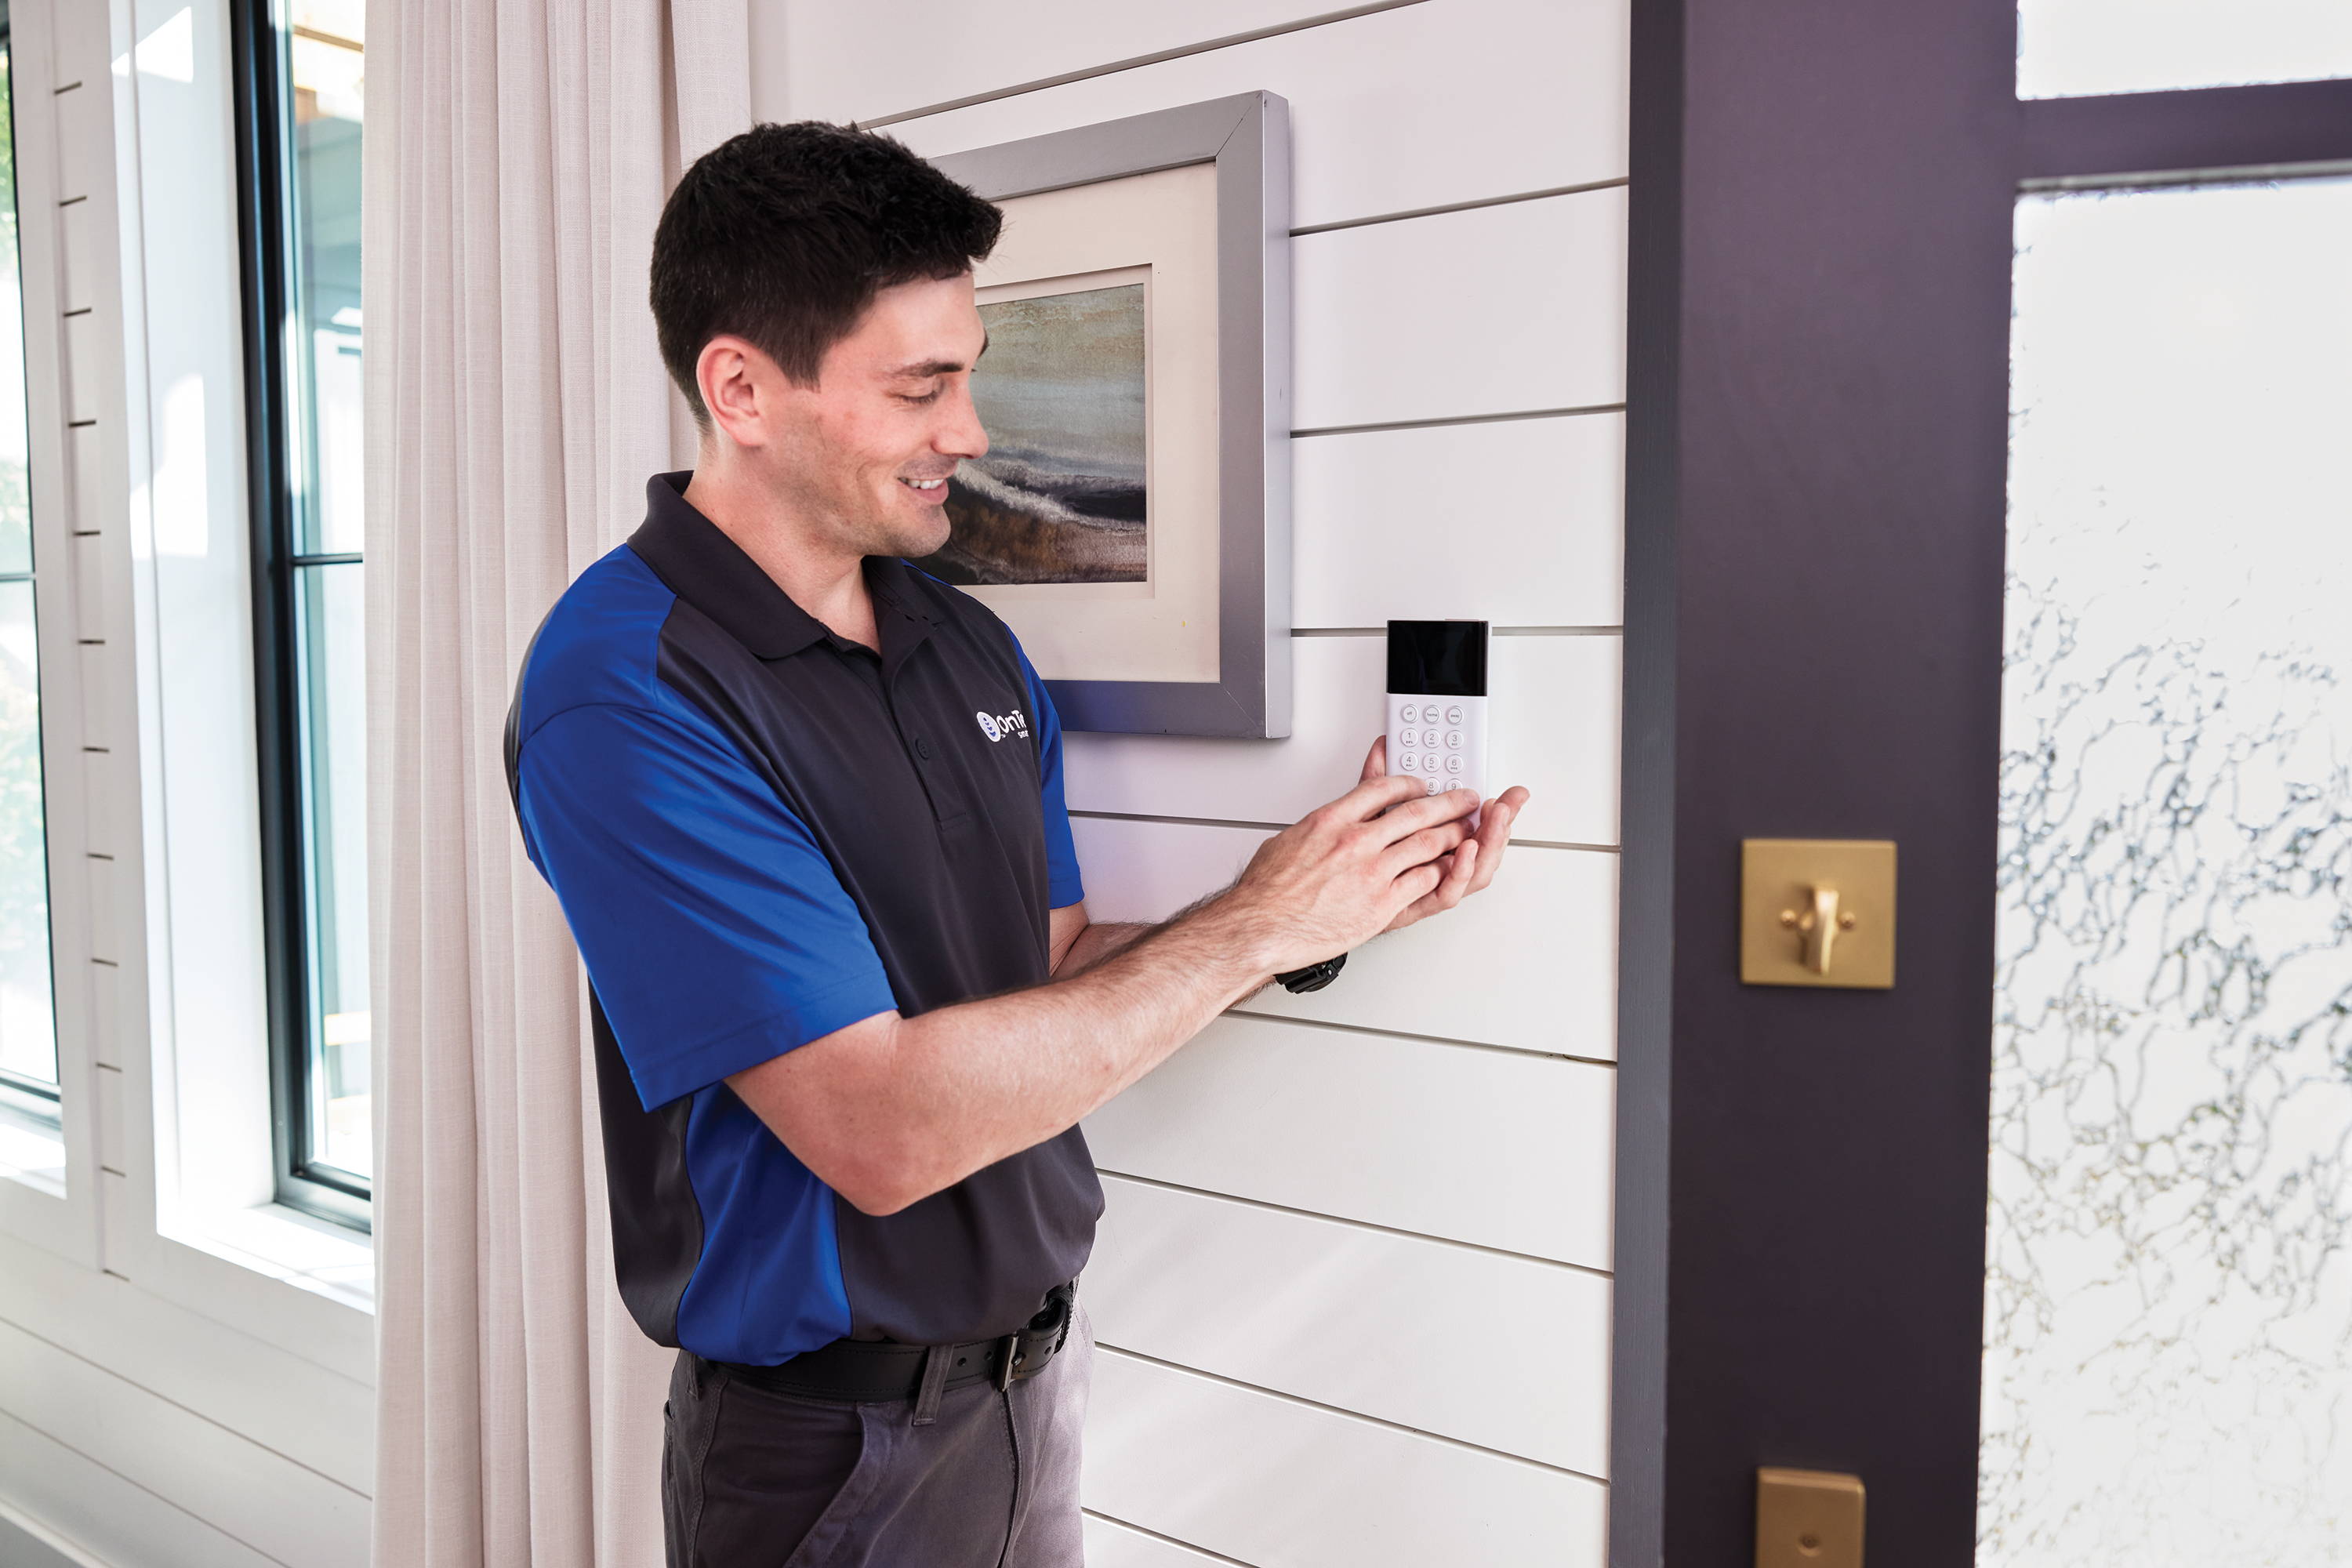 Wireless Smart Door Lock  SimpliSafe Home Security Systems